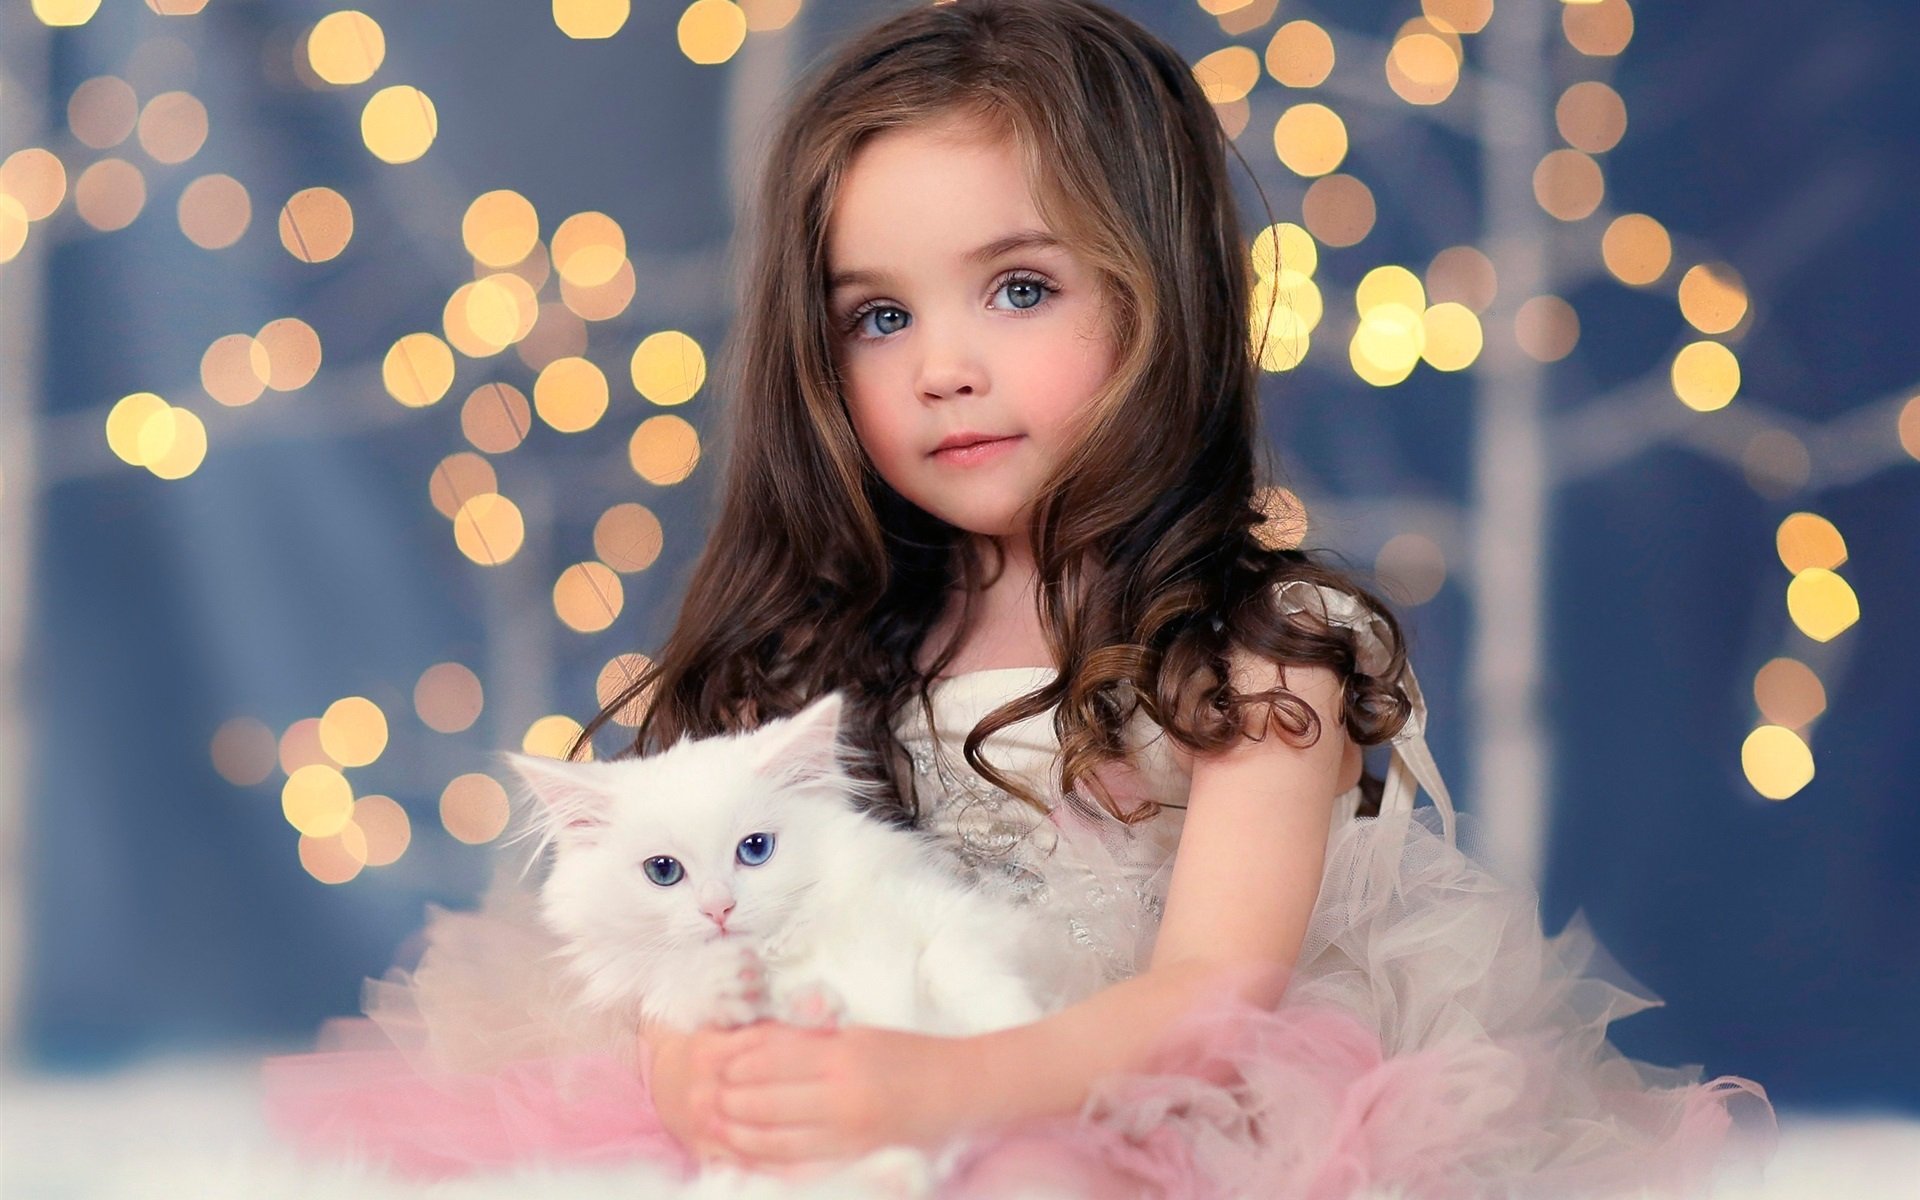 children, Girl, Blonde, Blue, Eyes, Cat, Animal, Cute, Dress, Angel Wallpaper